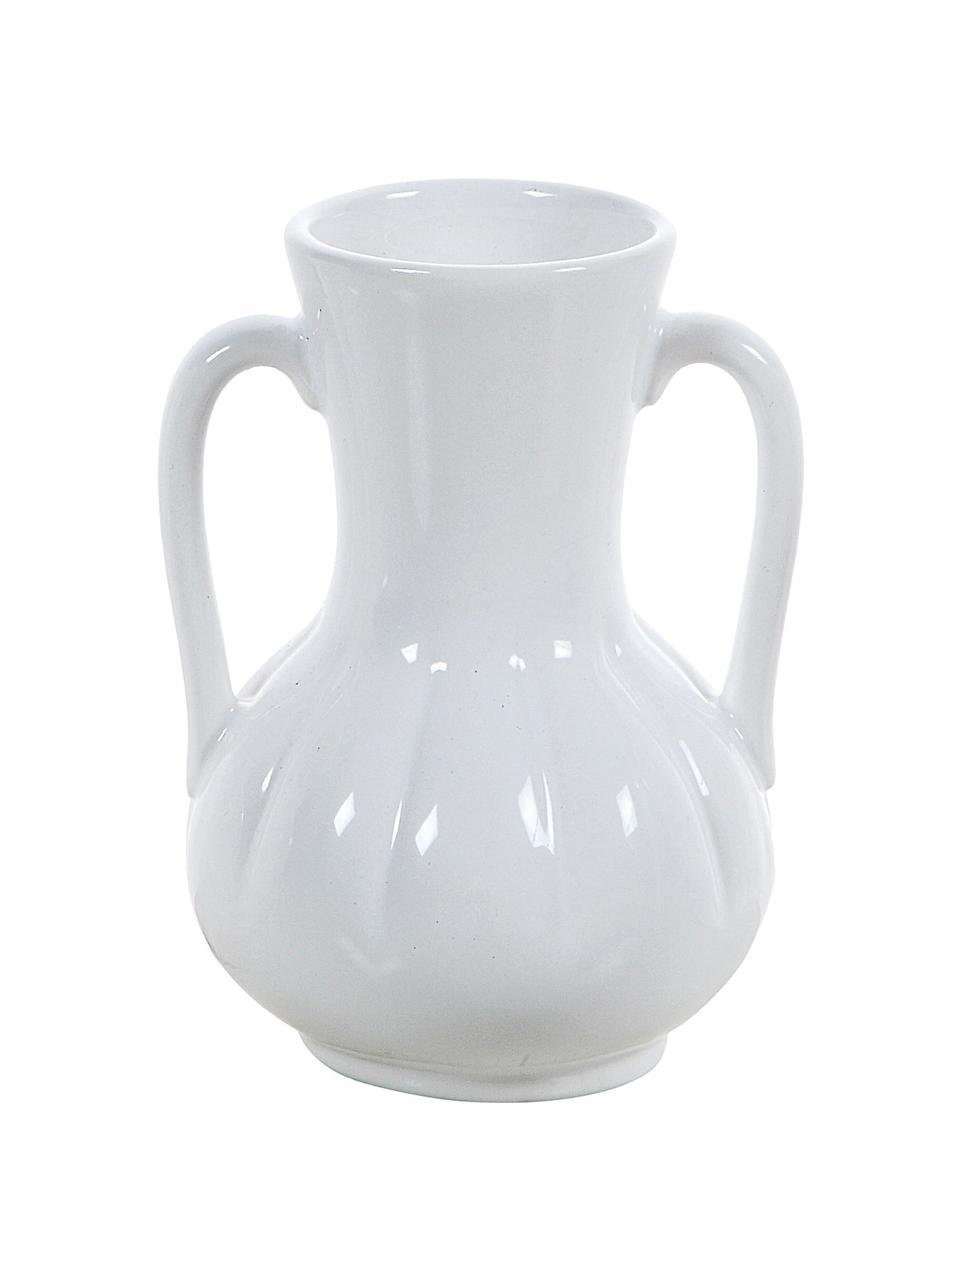 Keramik-Vasen-Set Mico in Weiß, 3-tlg., Keramik, Weiß, B 10 x H 12 cm